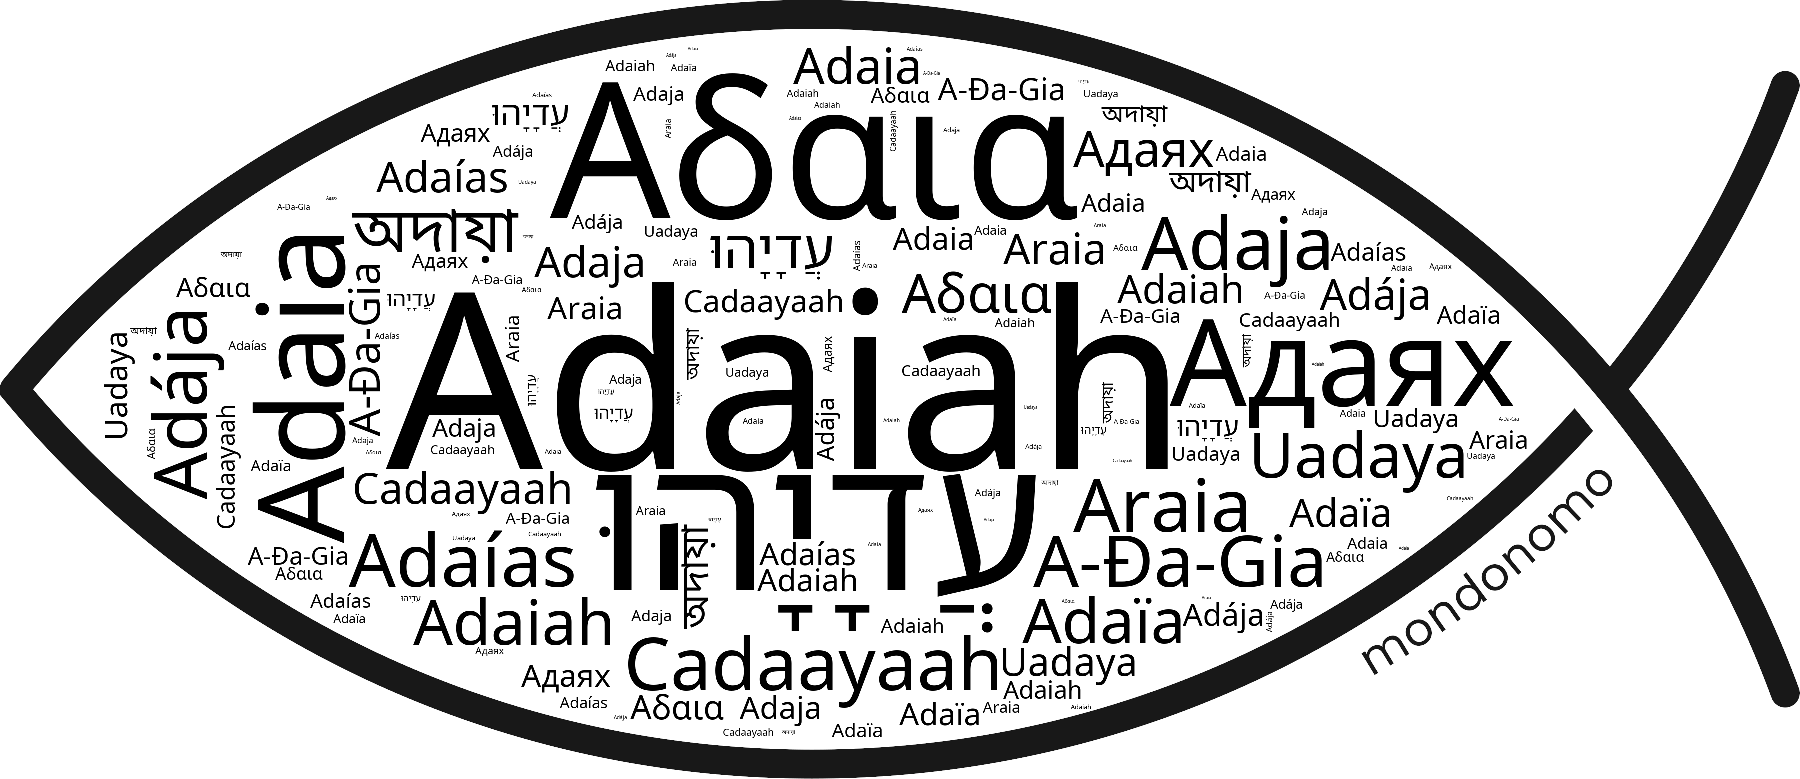 Name Adaiah in the world's Bibles